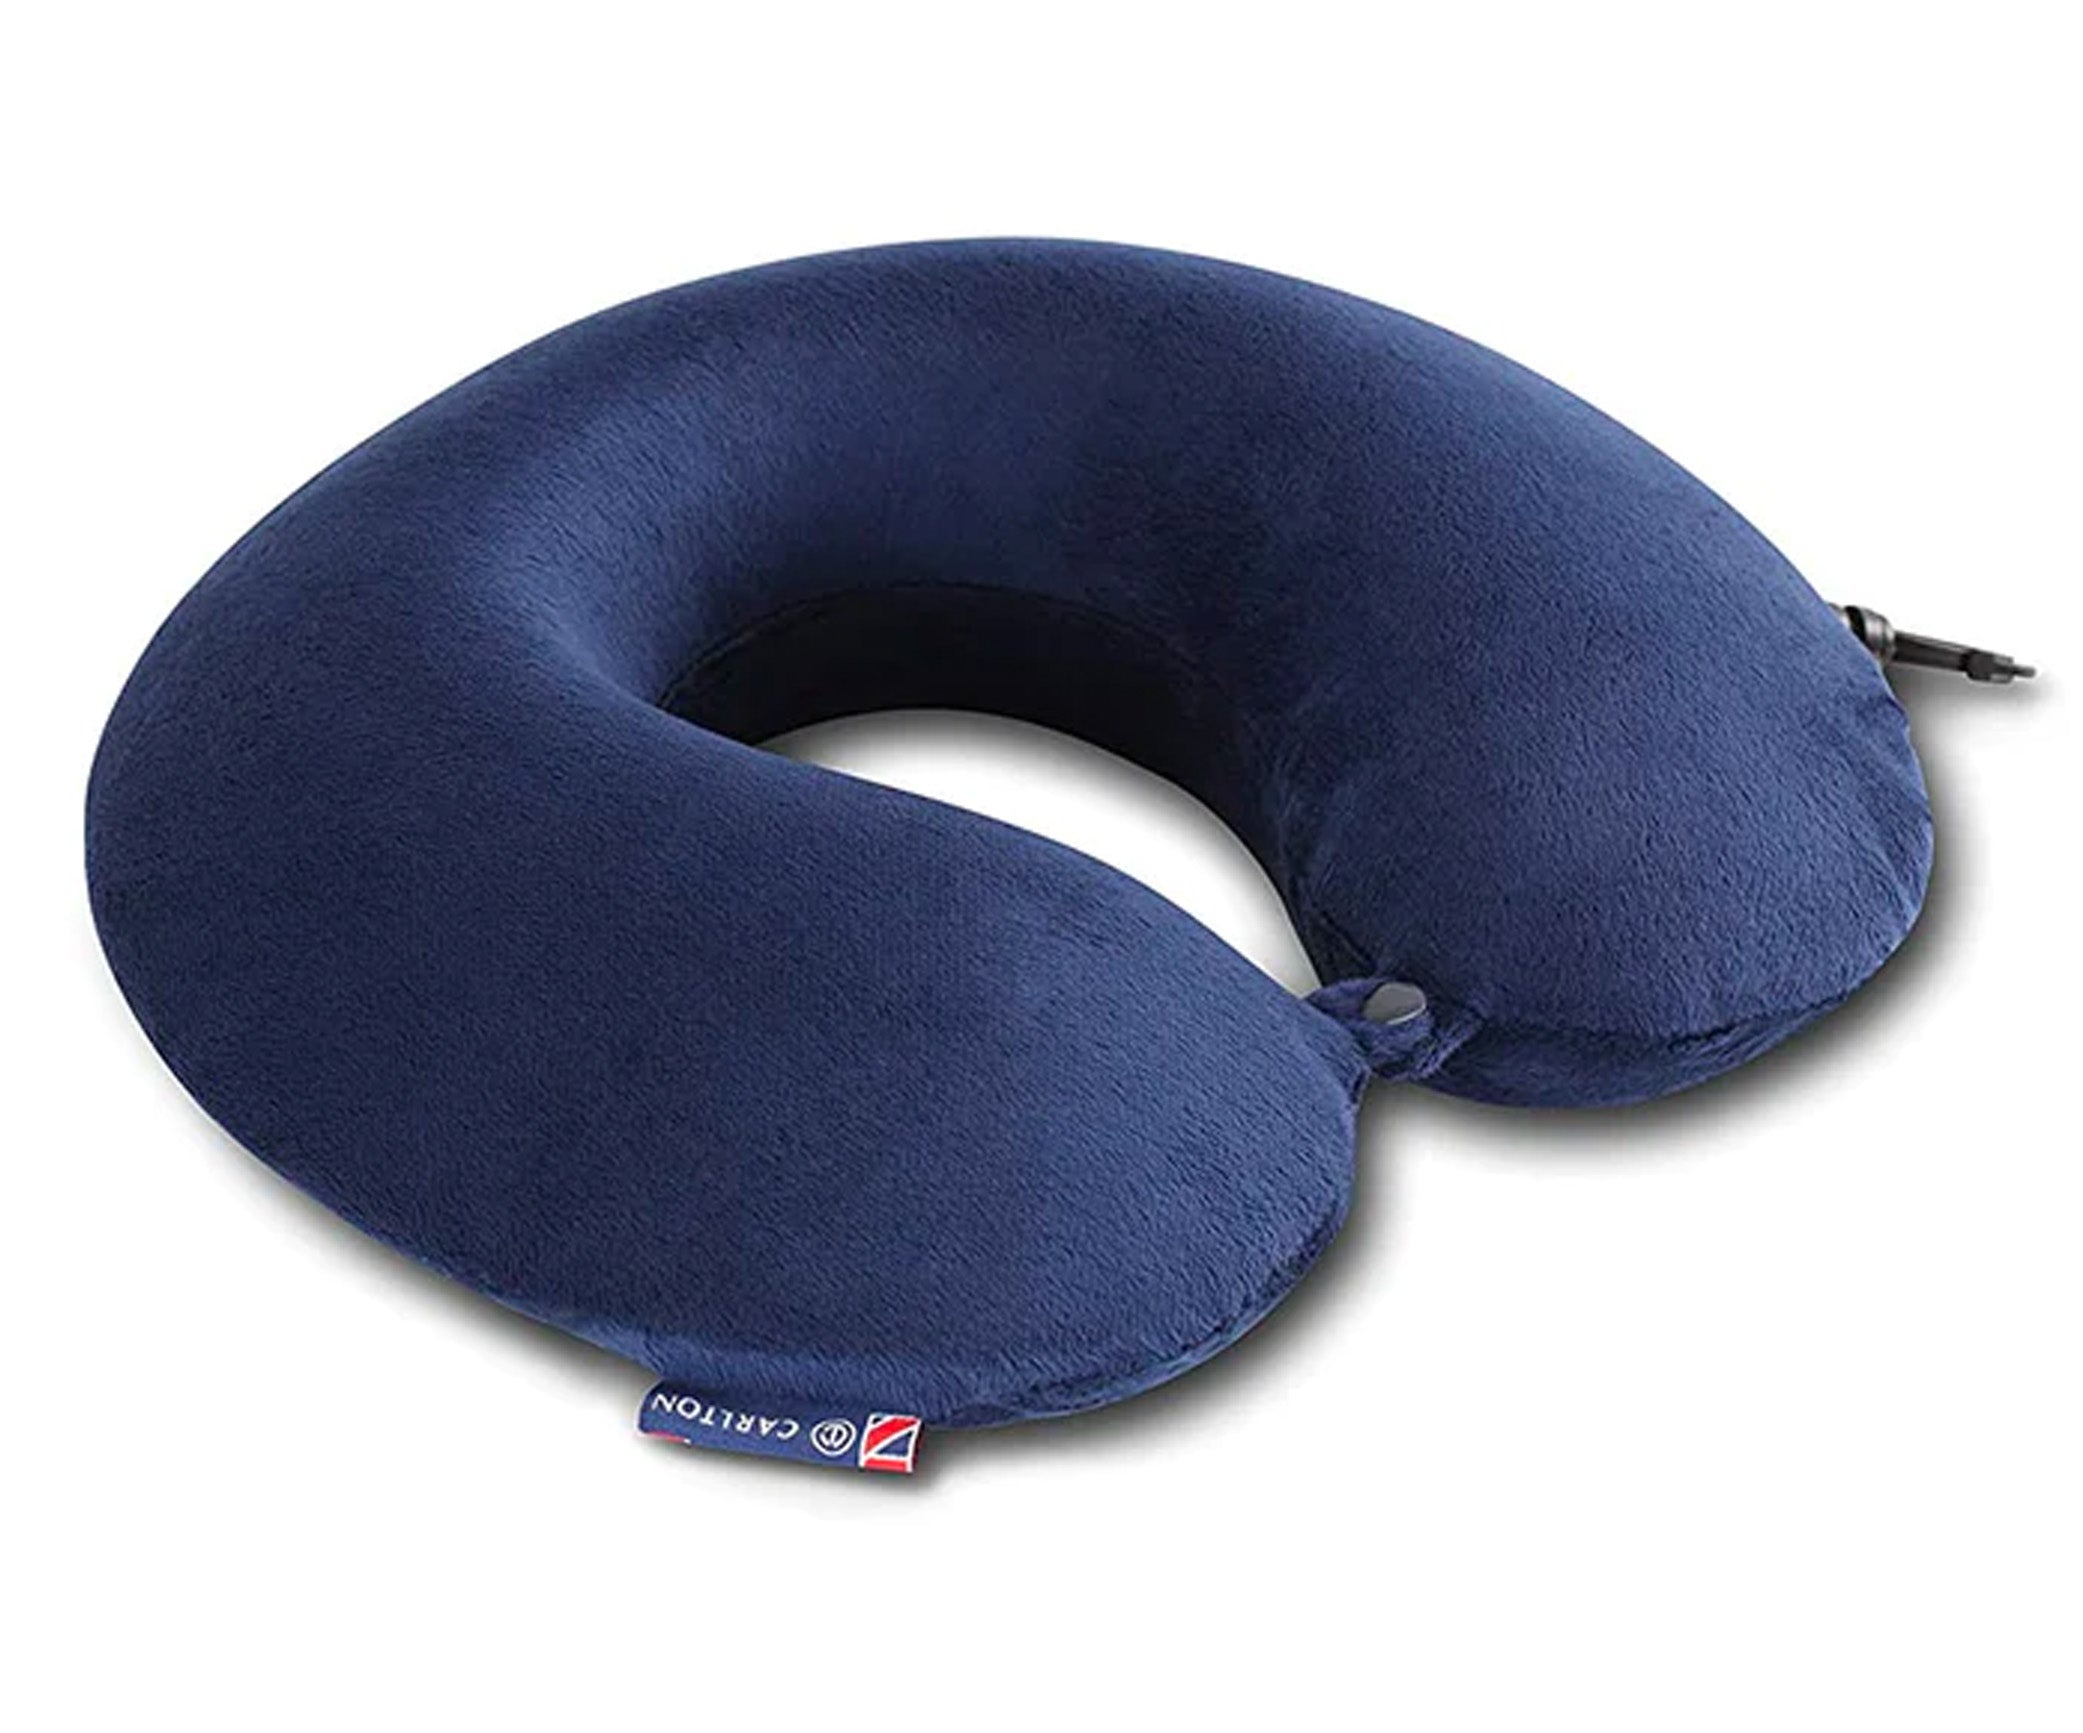 Carlton Micro Beads Travel Pillow, Blue, MBPILLOW